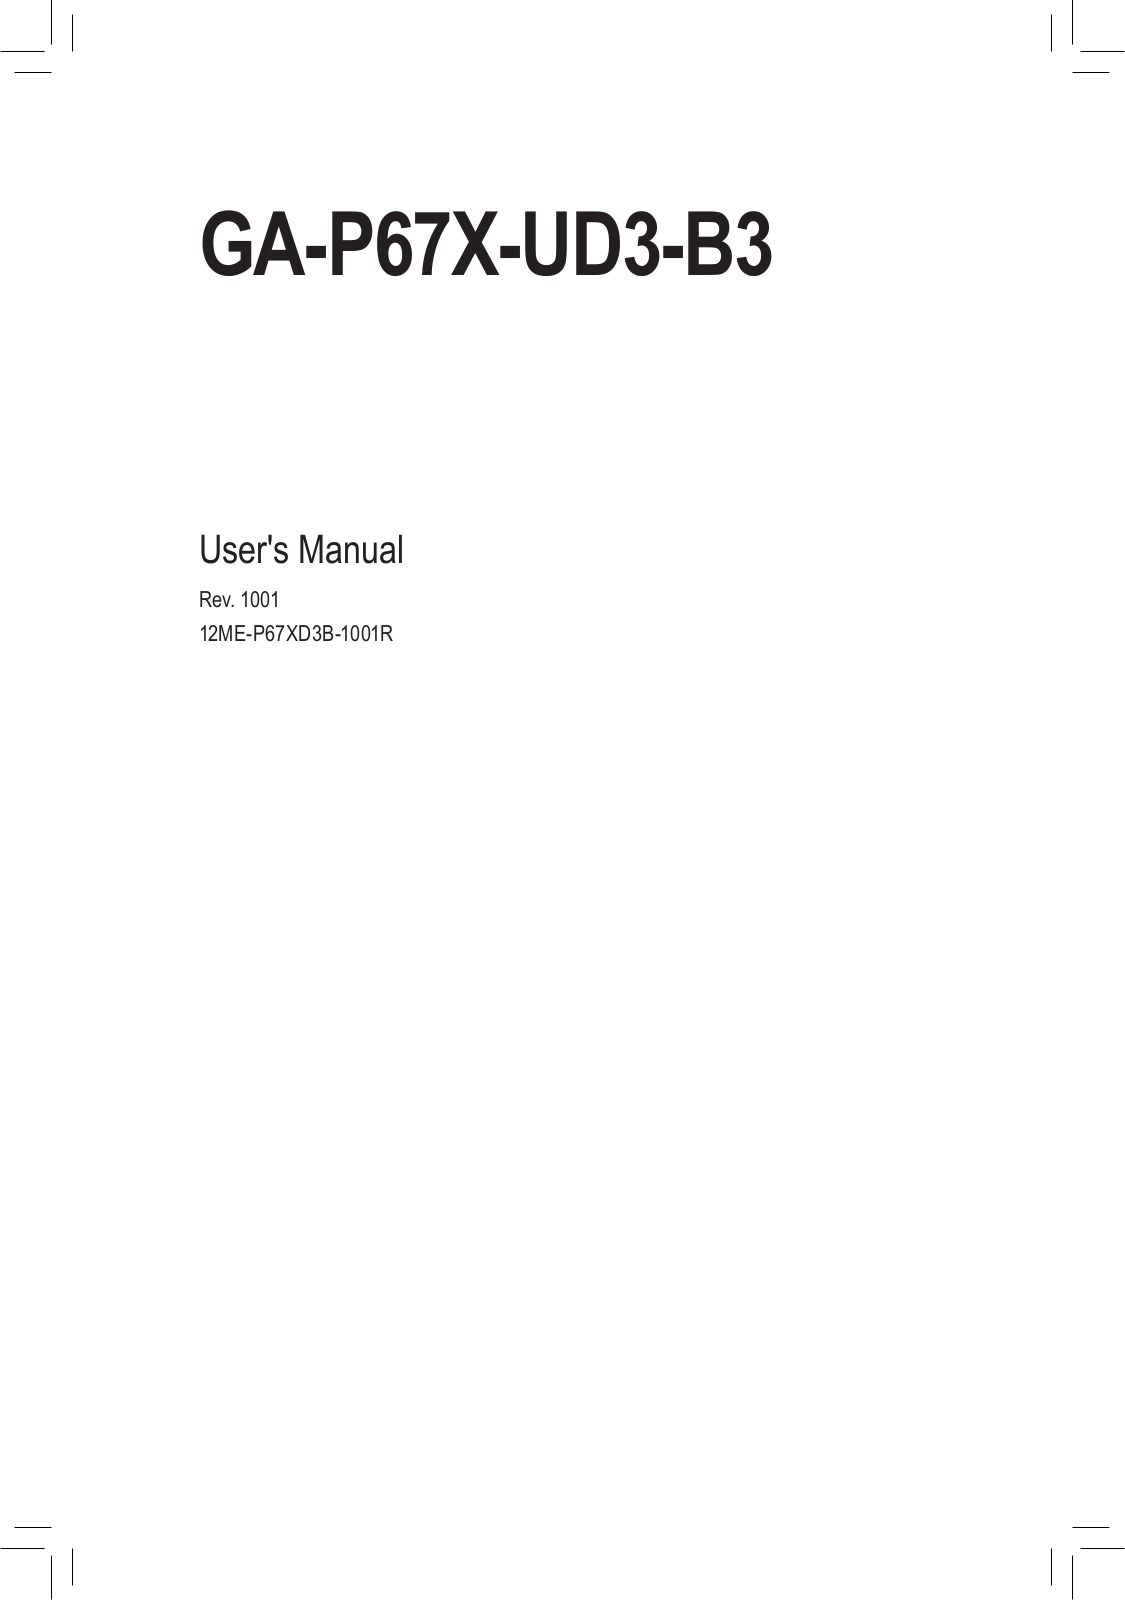 Gigabyte GA-P67X-UD3-B3 (rev. 1.0) User Manual